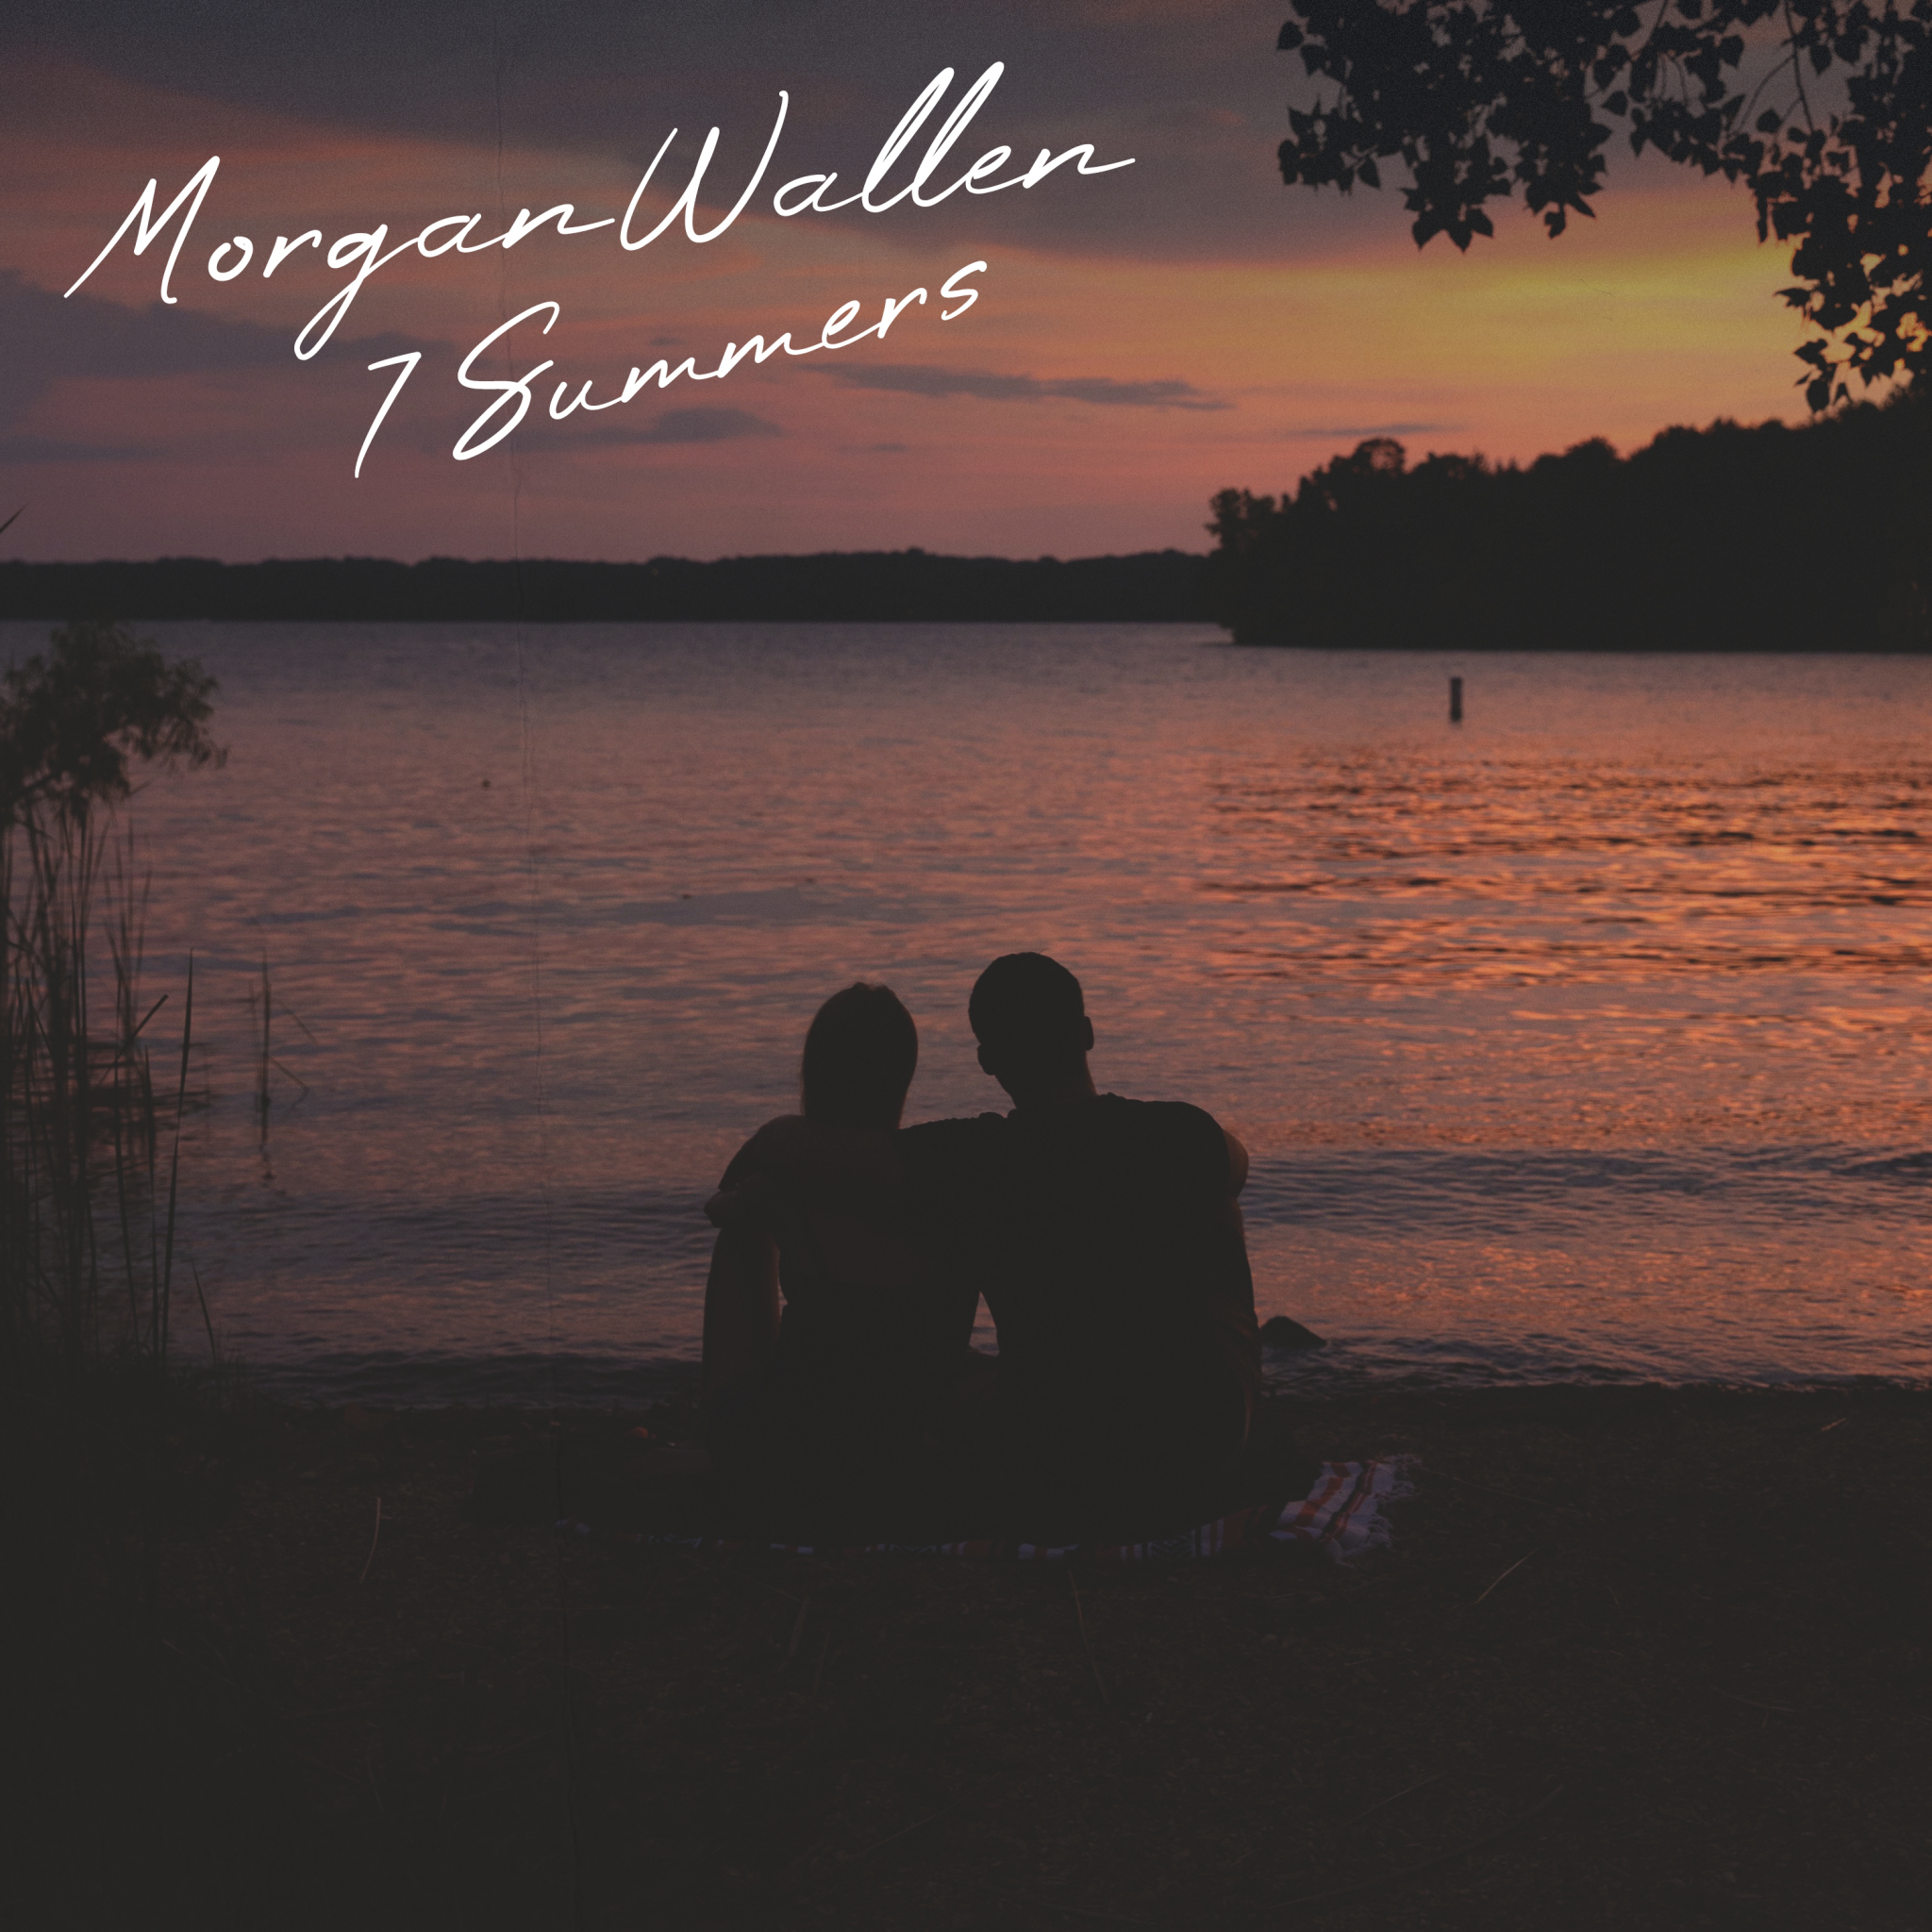 7 Summers Morgan Wallen